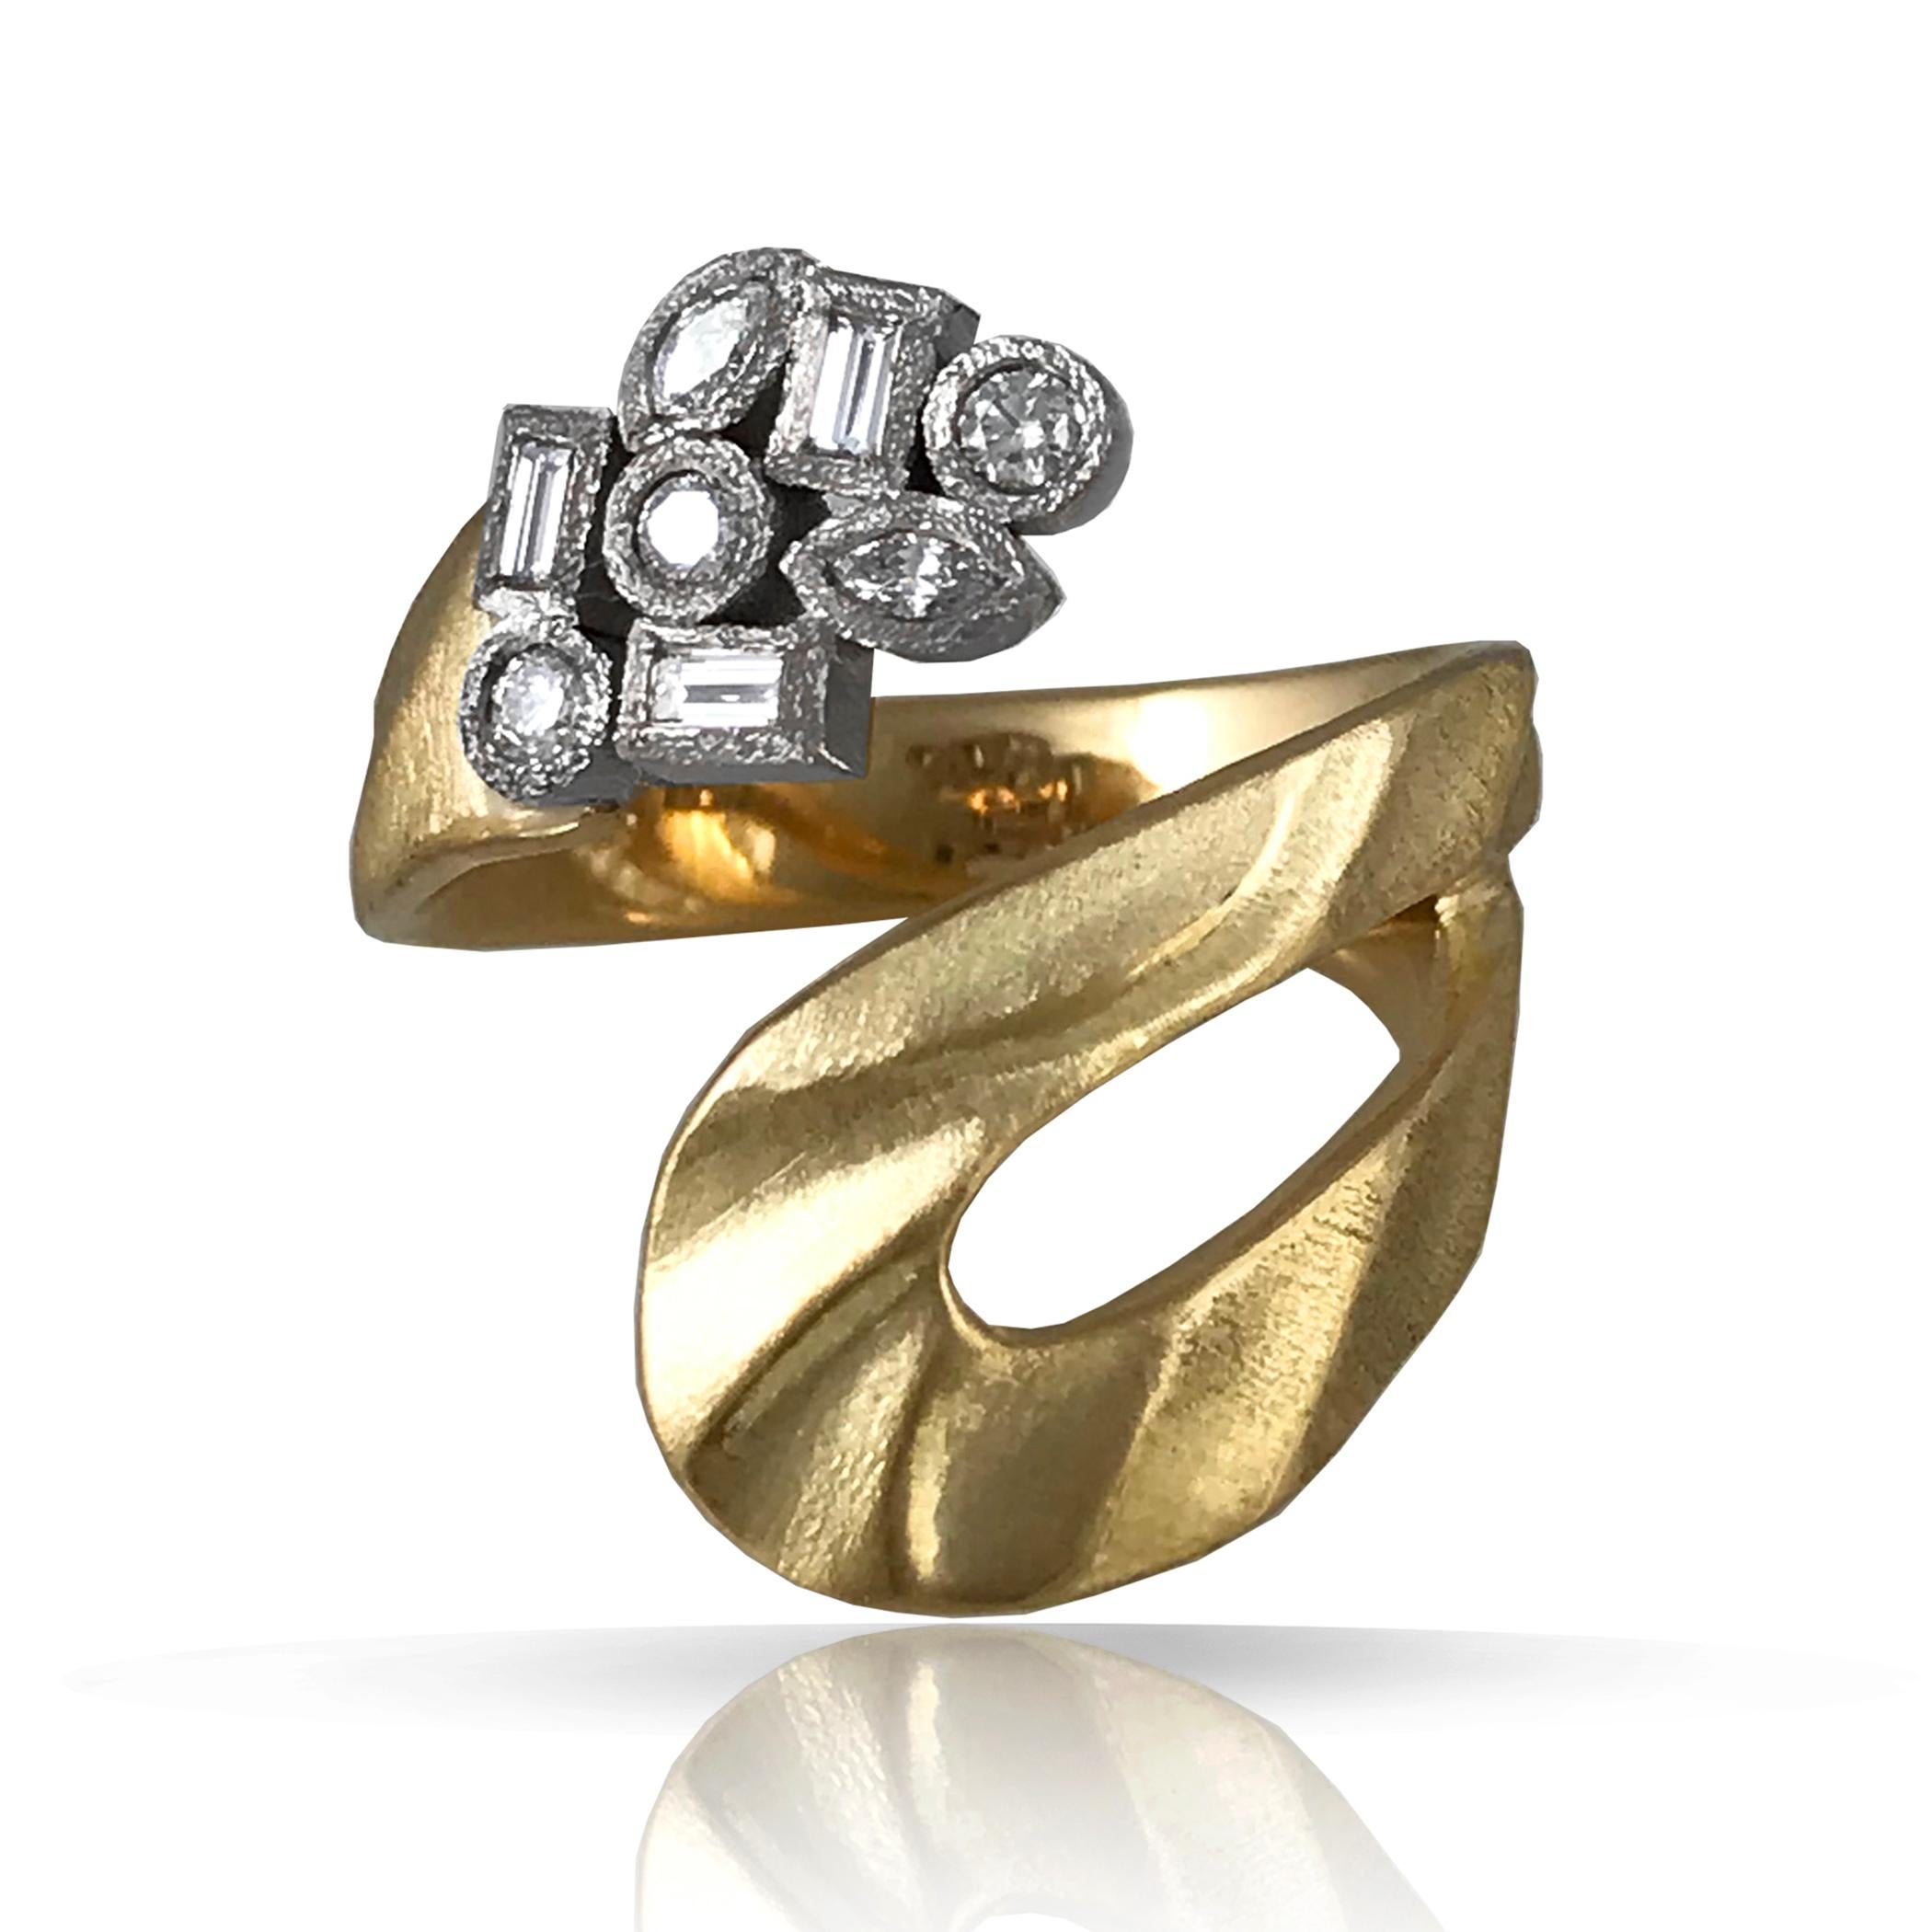 18 Karat Yellow Gold Small Marlene Ring with Diamonds from K.Mita